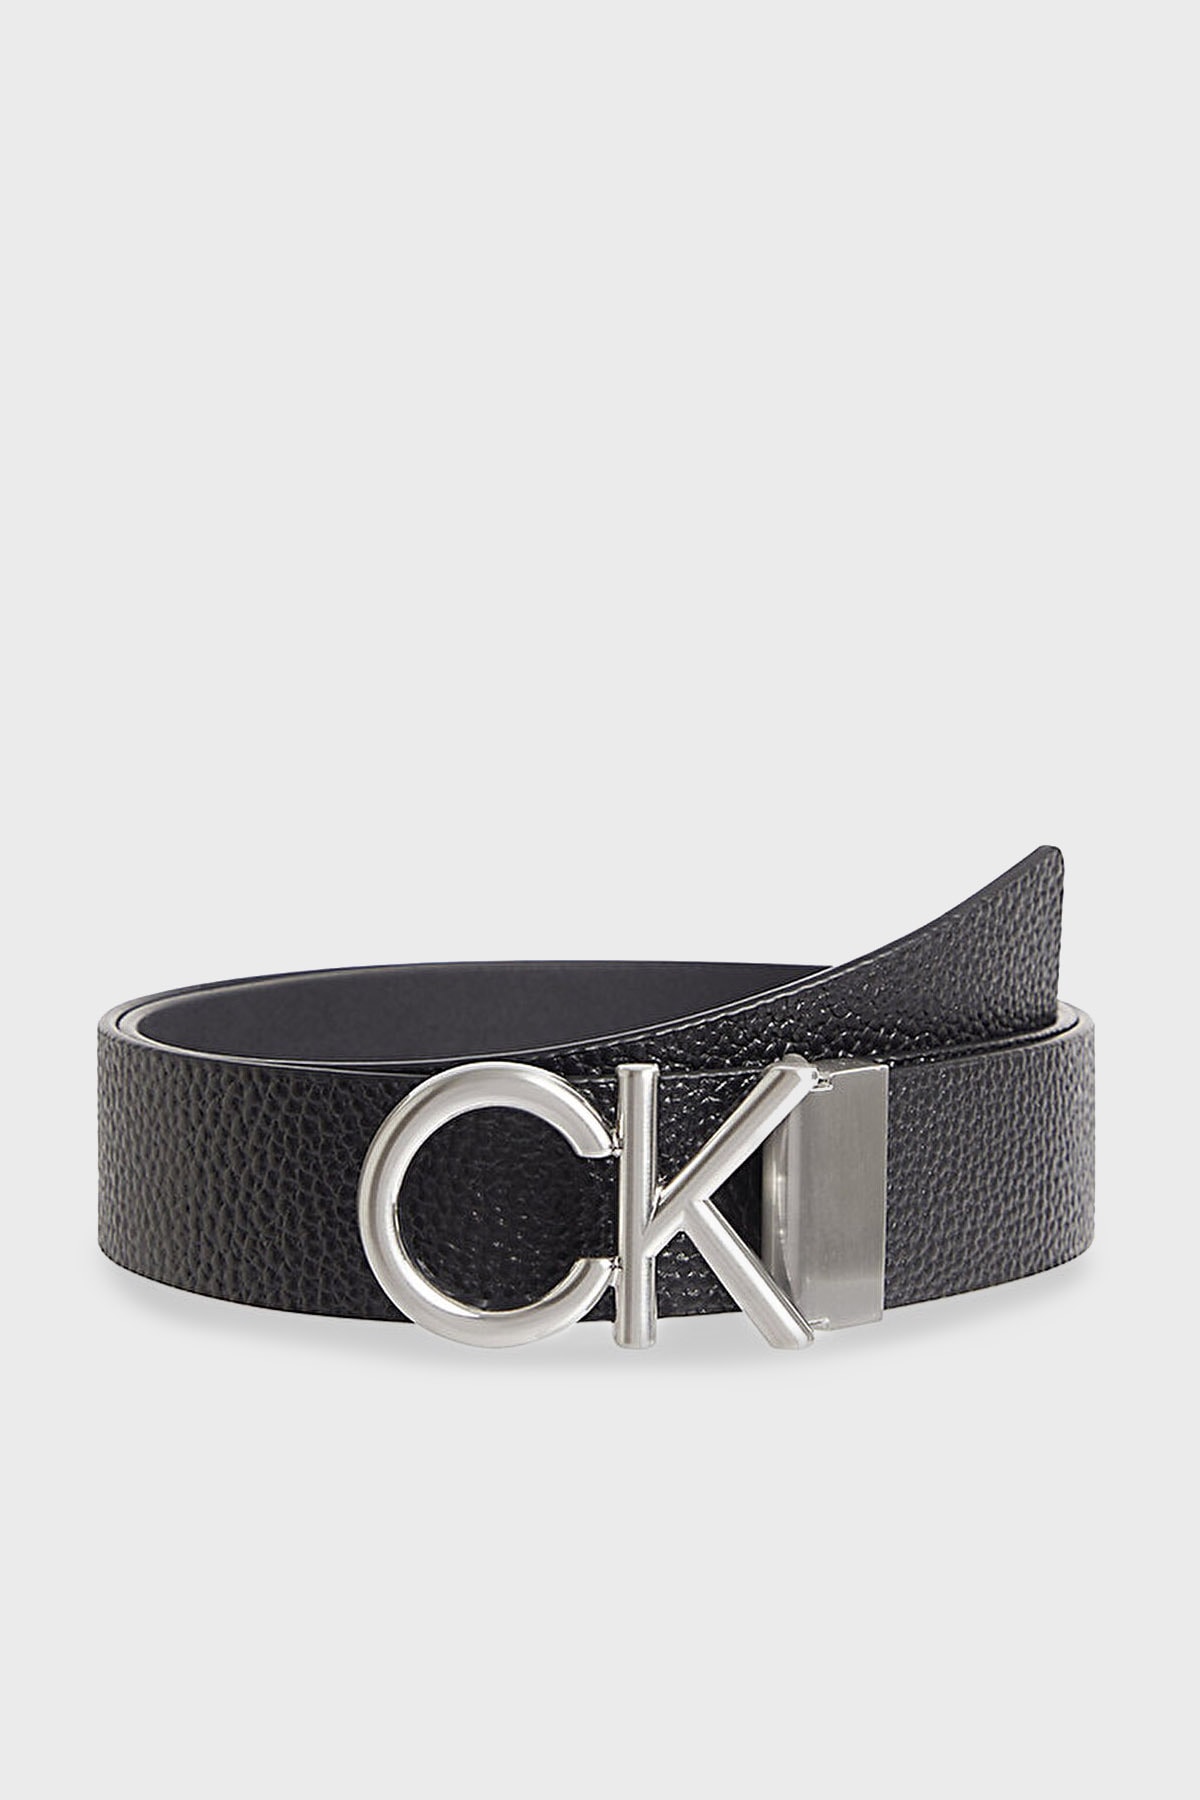 Calvin Klein Logolu Deri Kemer Erkek Kemer K50k509956 Bax